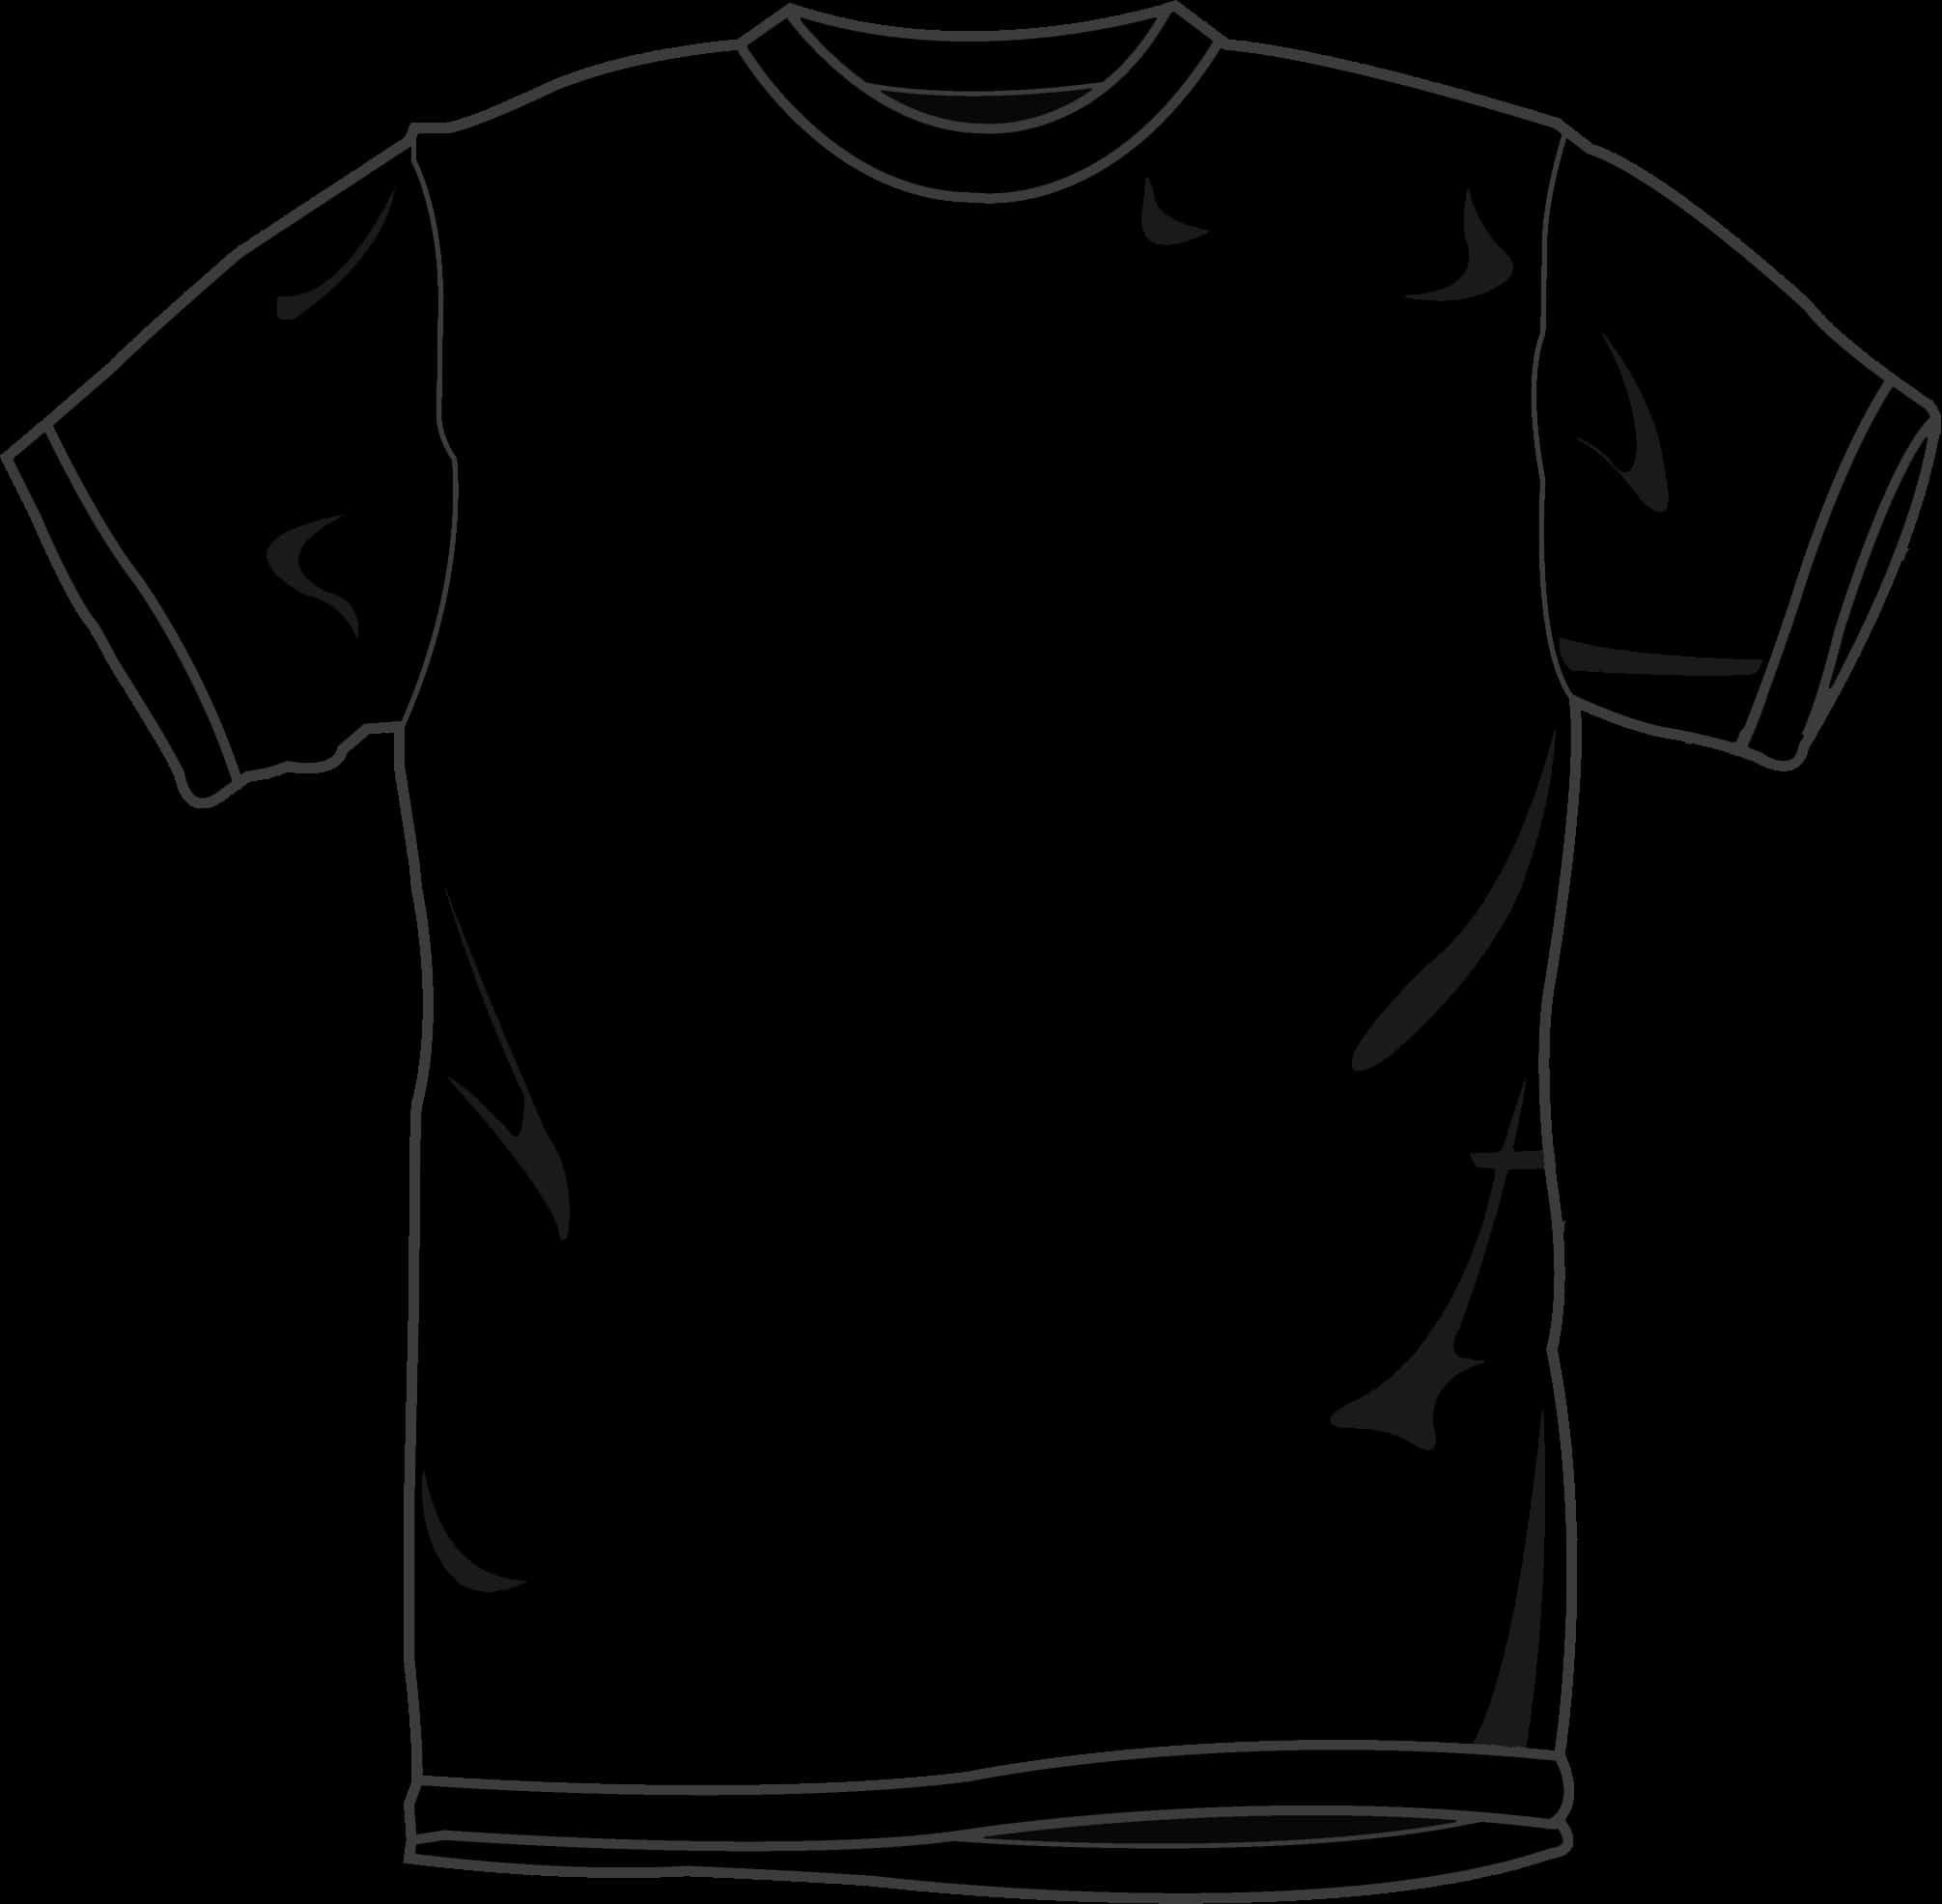 Black T Shirt Graphic PNG image